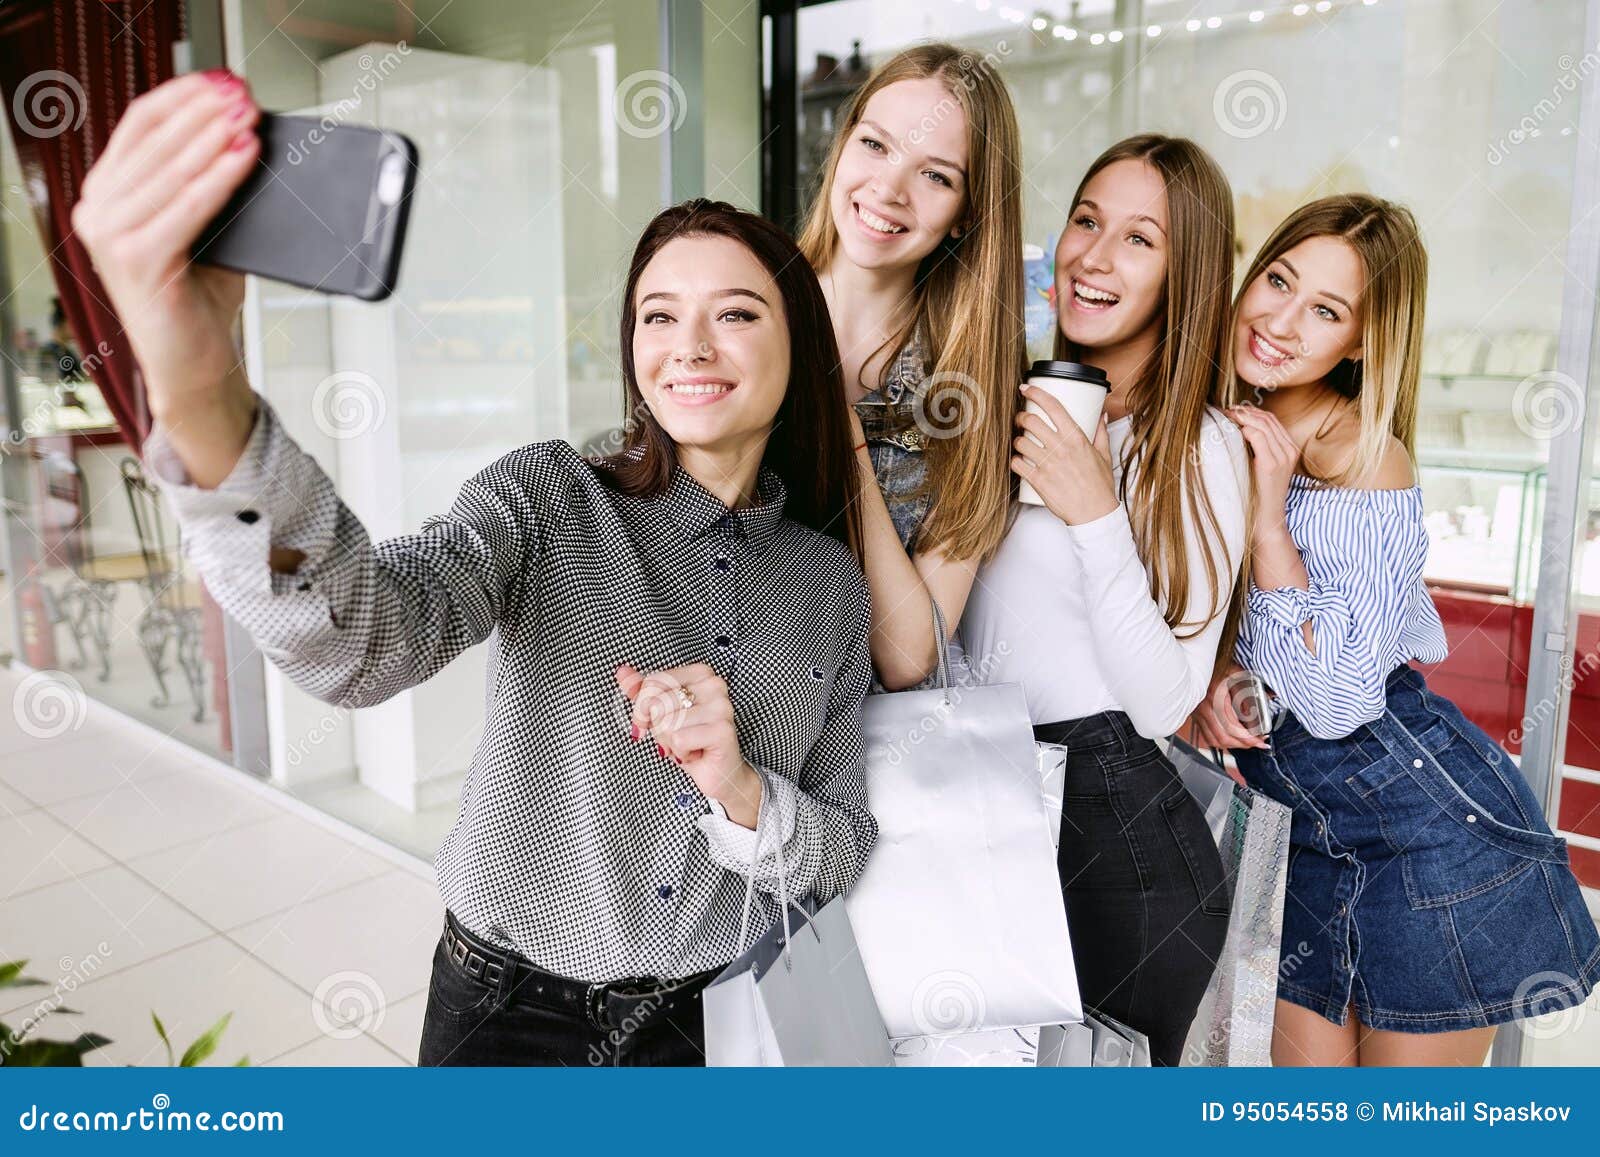 Four Beautiful Girls Doing Selfie in Shopping Center Stock Photo ...